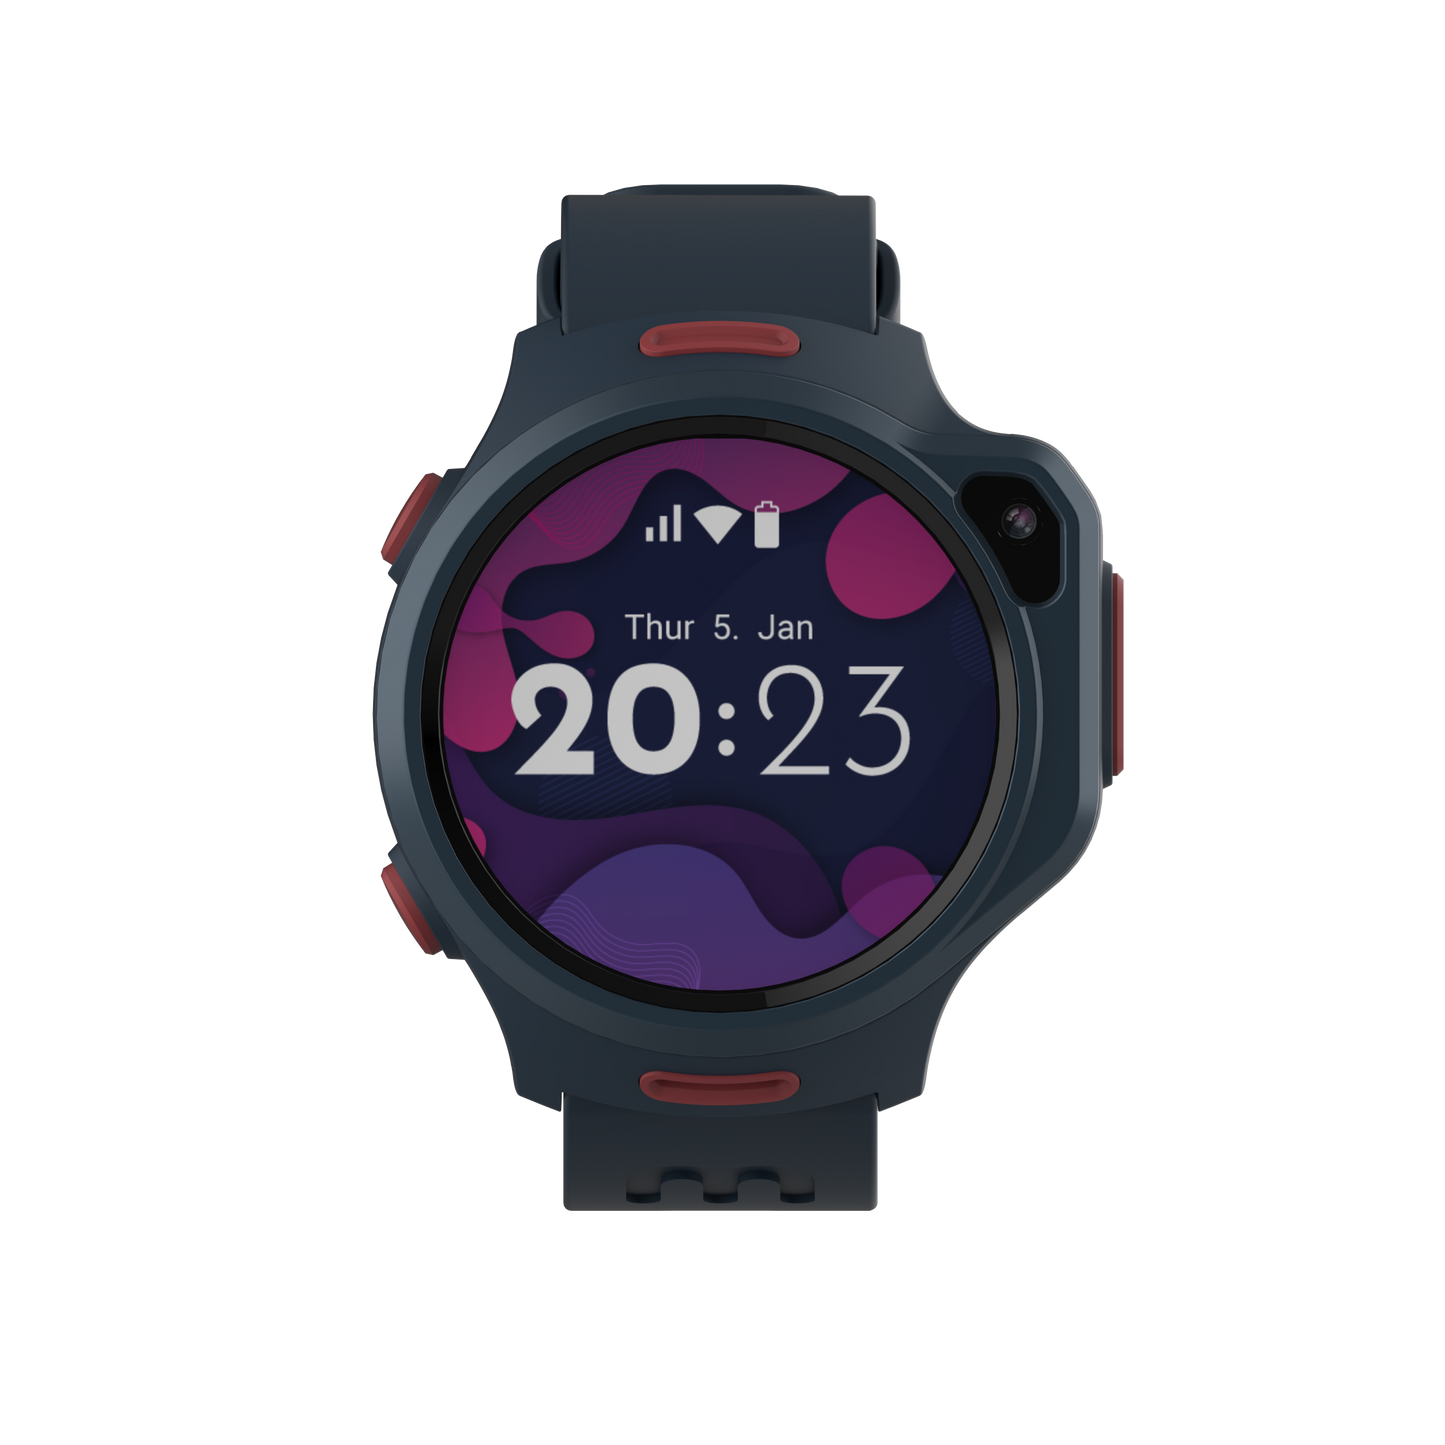 4G eSIM Kids Smartwatch with GPS Tracking - myFirst Fone R2